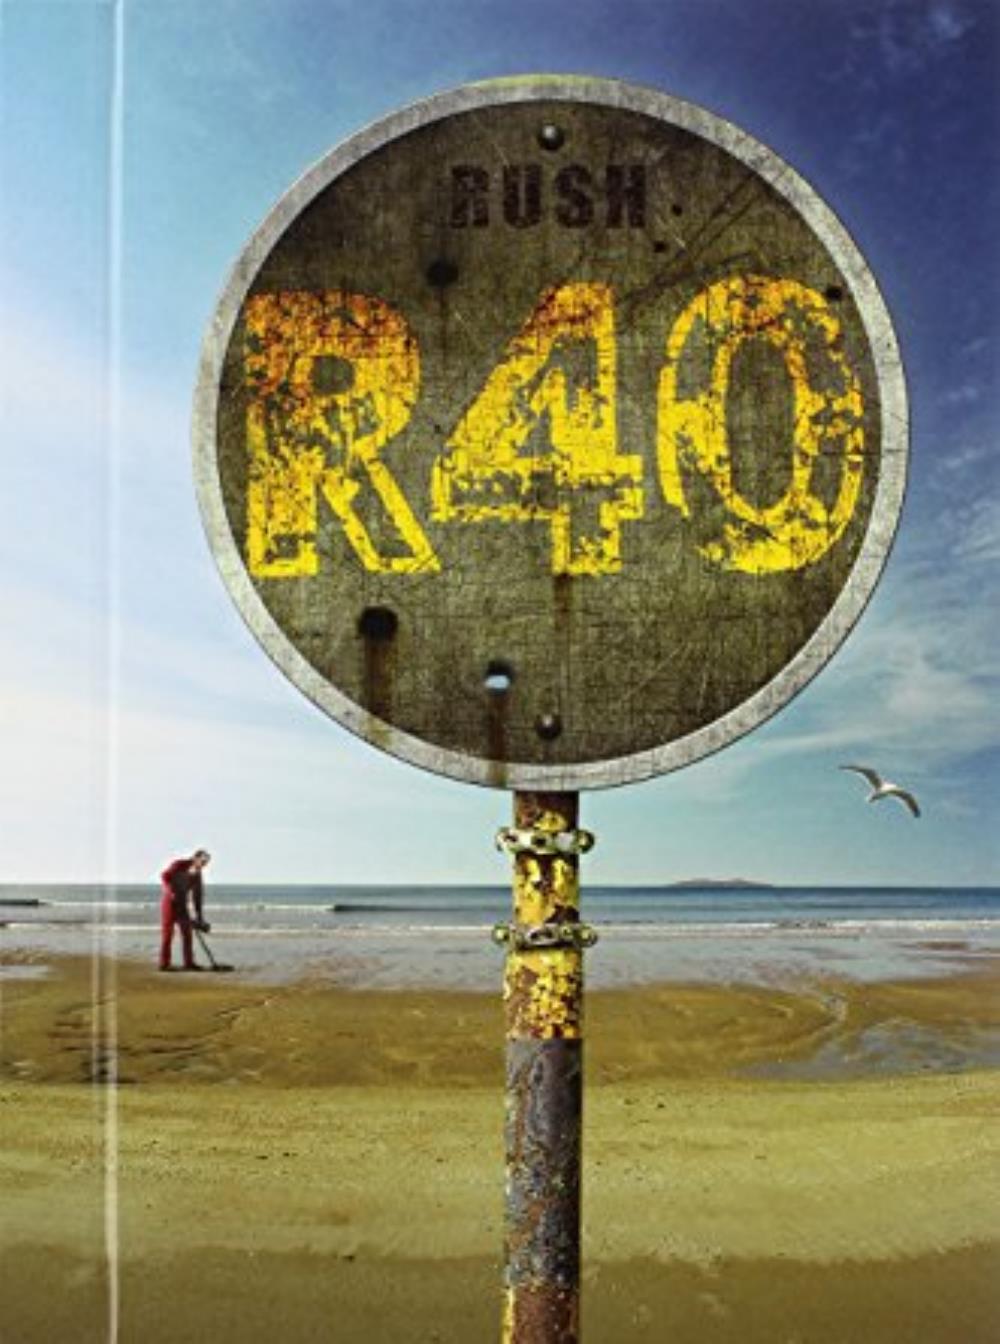 Rush R 40 (DVD Box Set) album cover